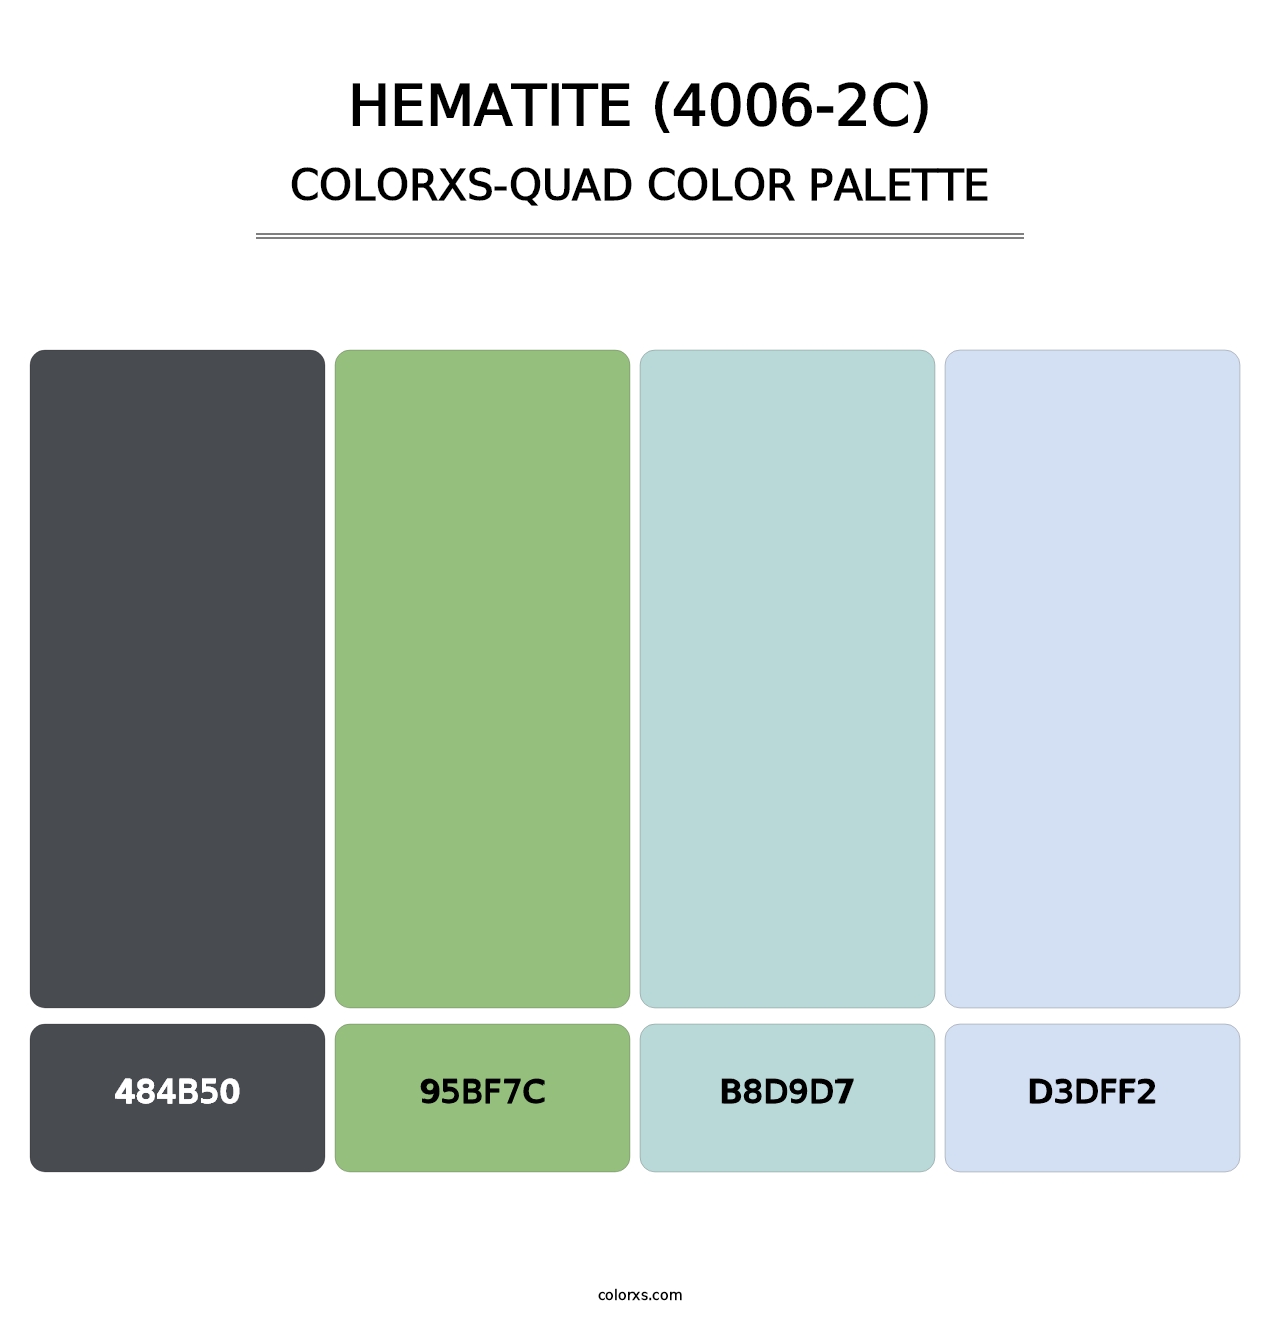 Hematite (4006-2C) - Colorxs Quad Palette